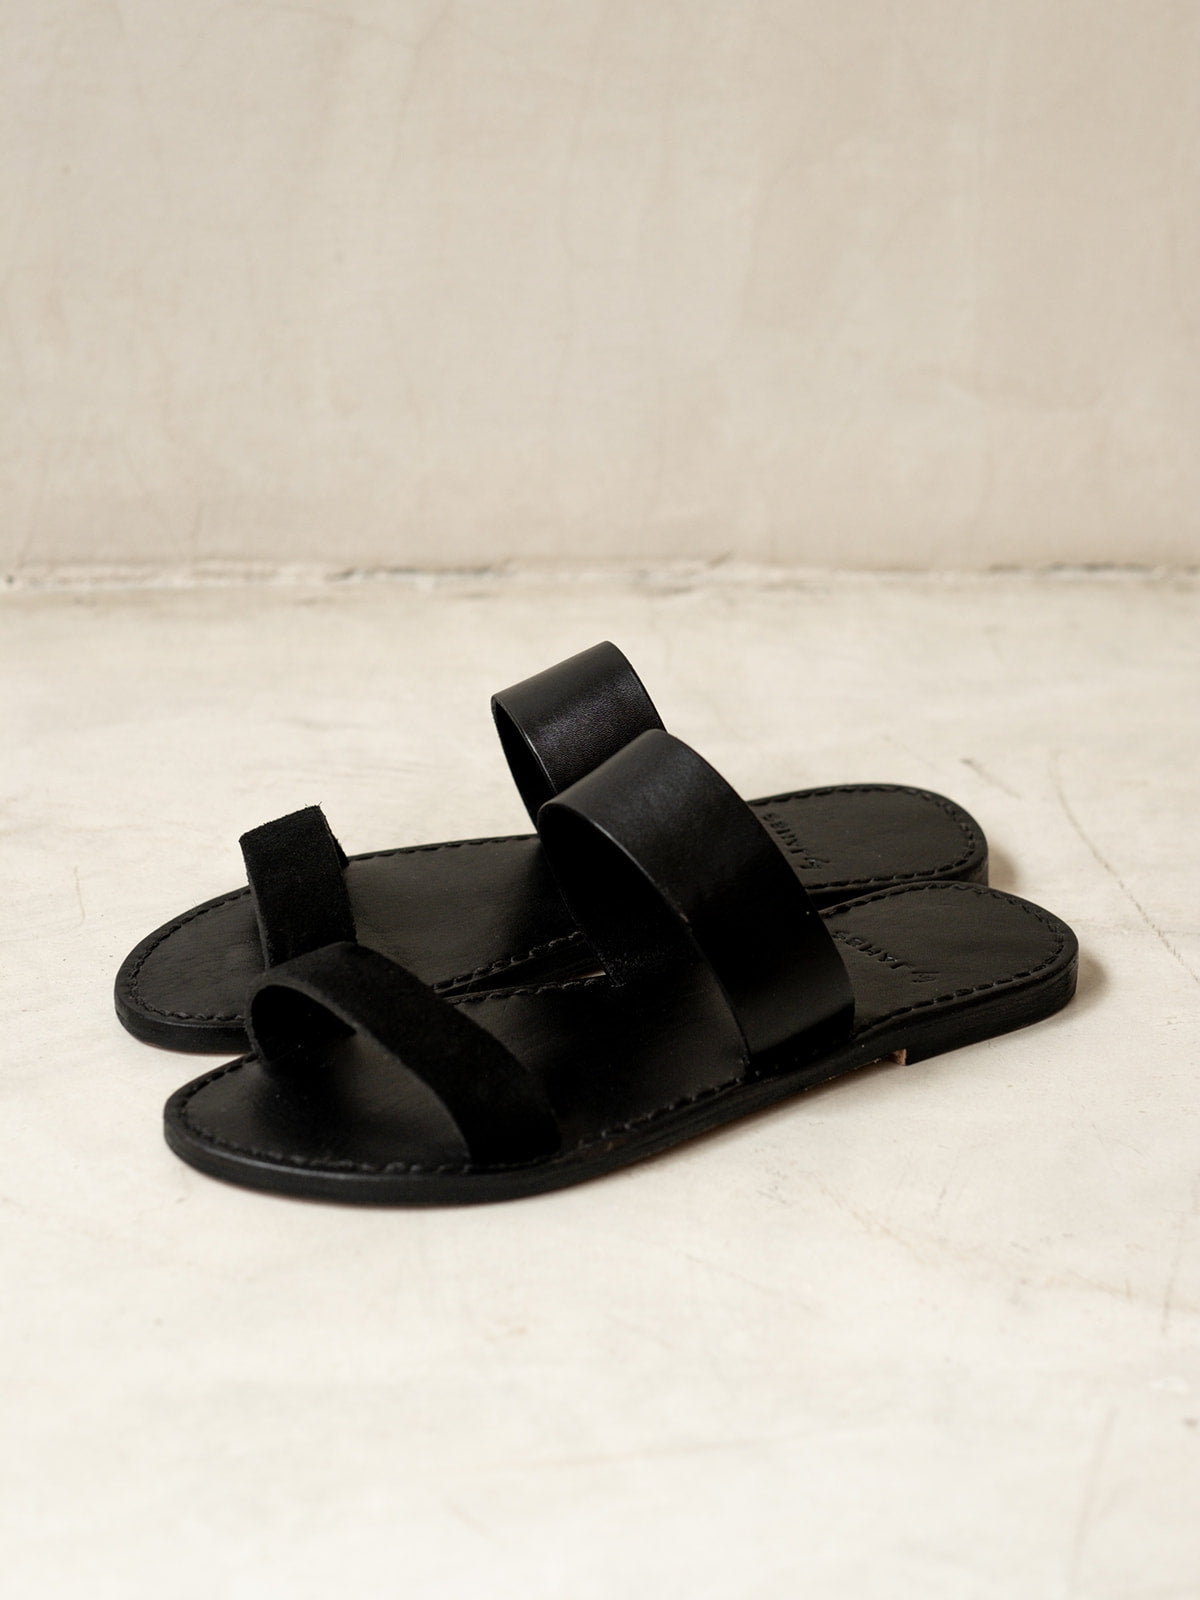 James Sandal - Women's Double Strap Leather Sandals | byJAMES